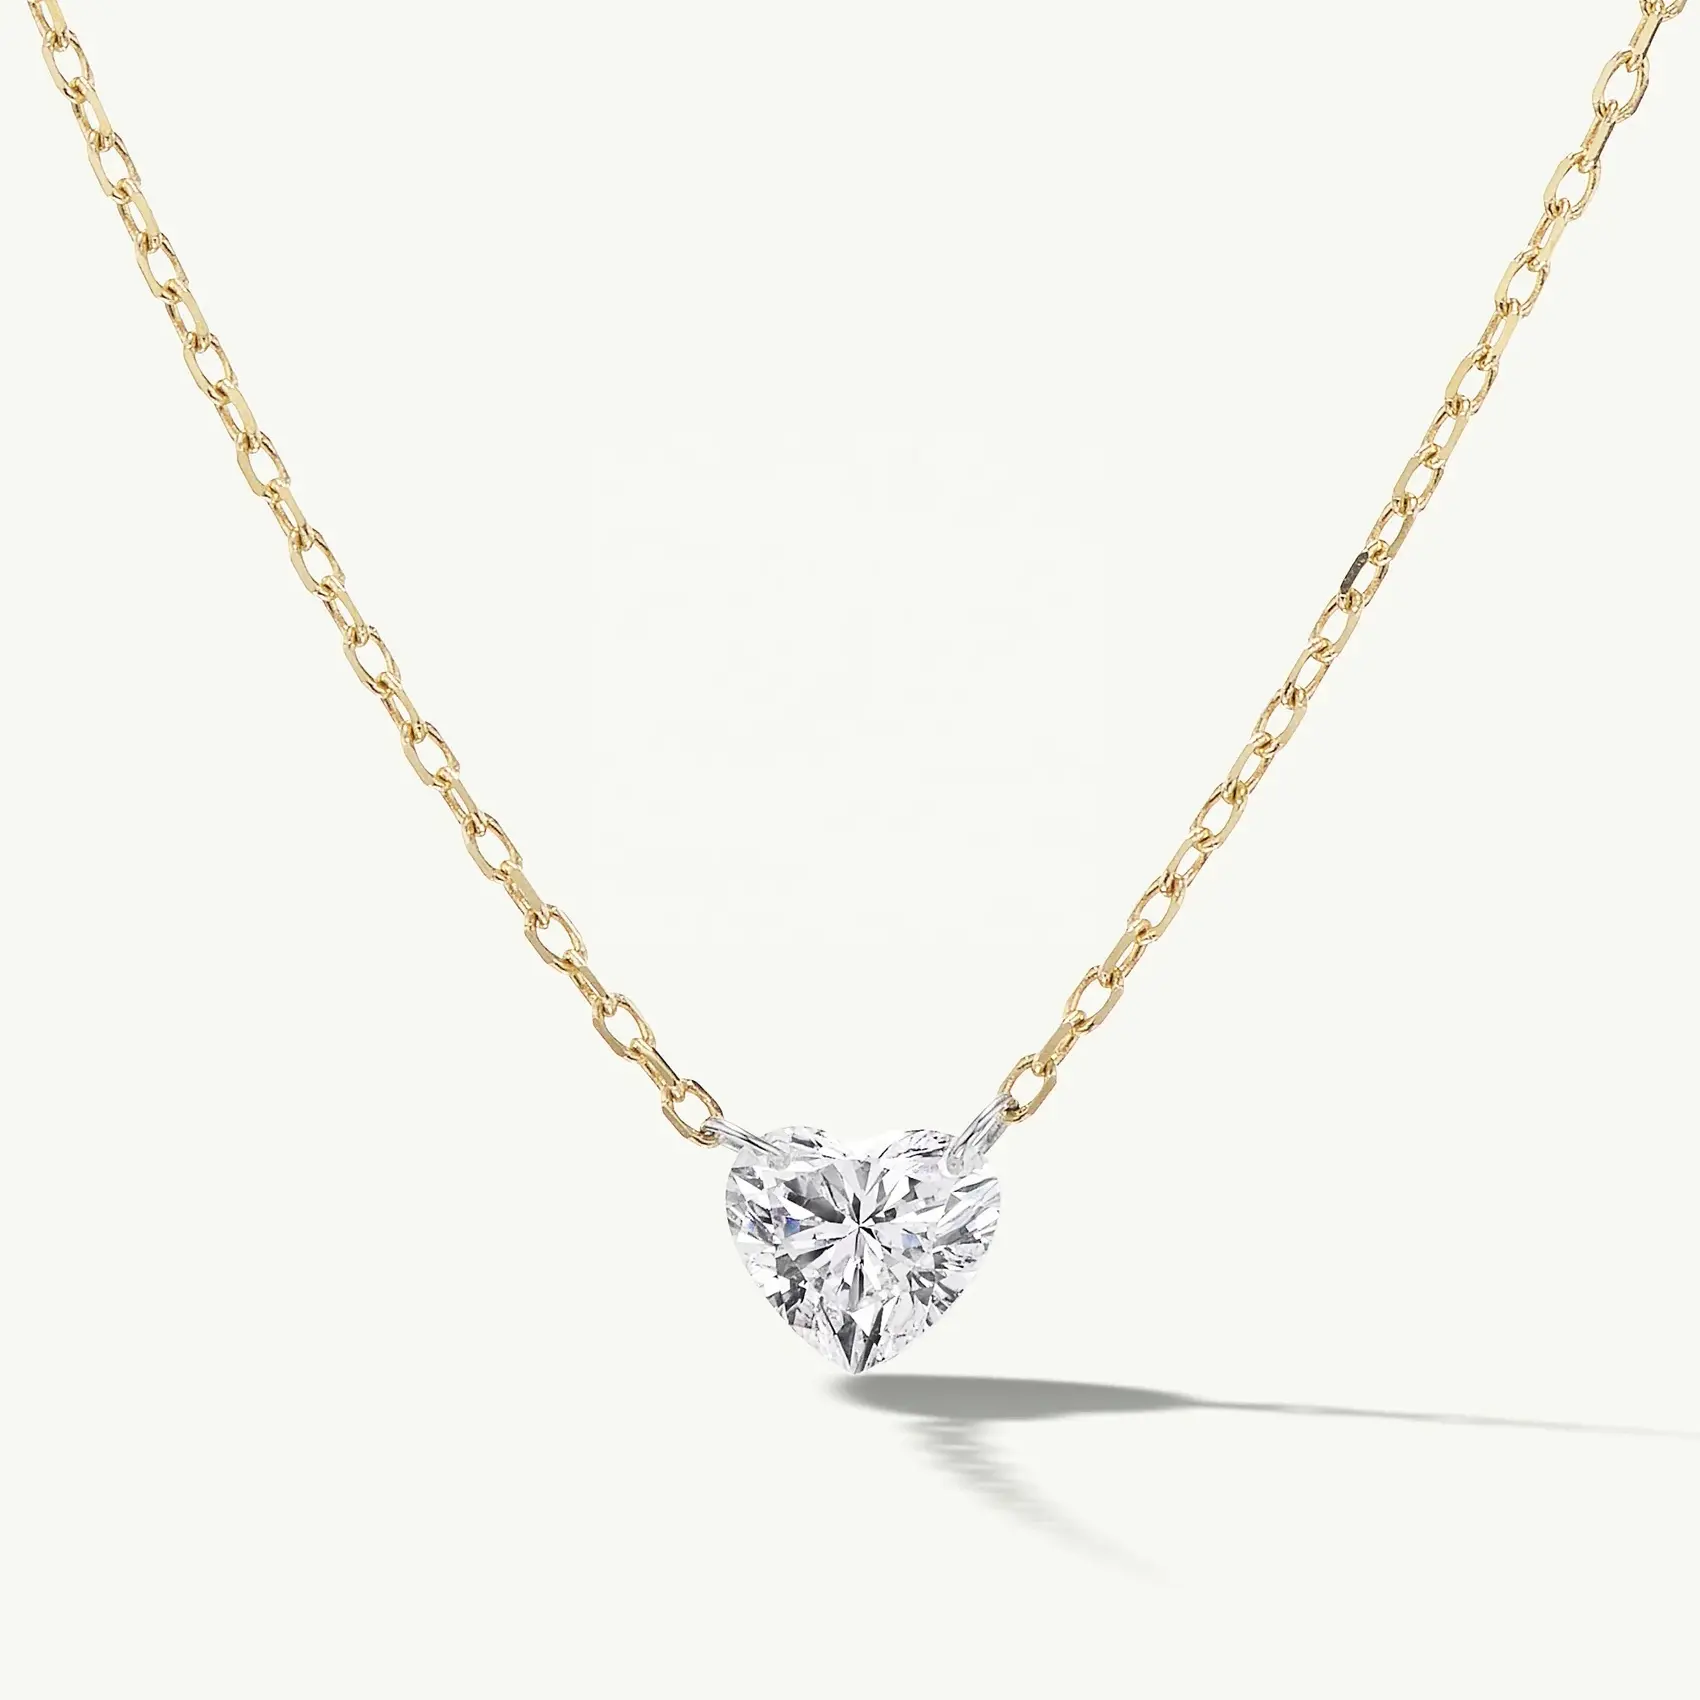 LOZRUNVE Fine Jewelry Großhandel Roségold Pierced Heart Kristall Halskette Choker Silber 925 für Frauen